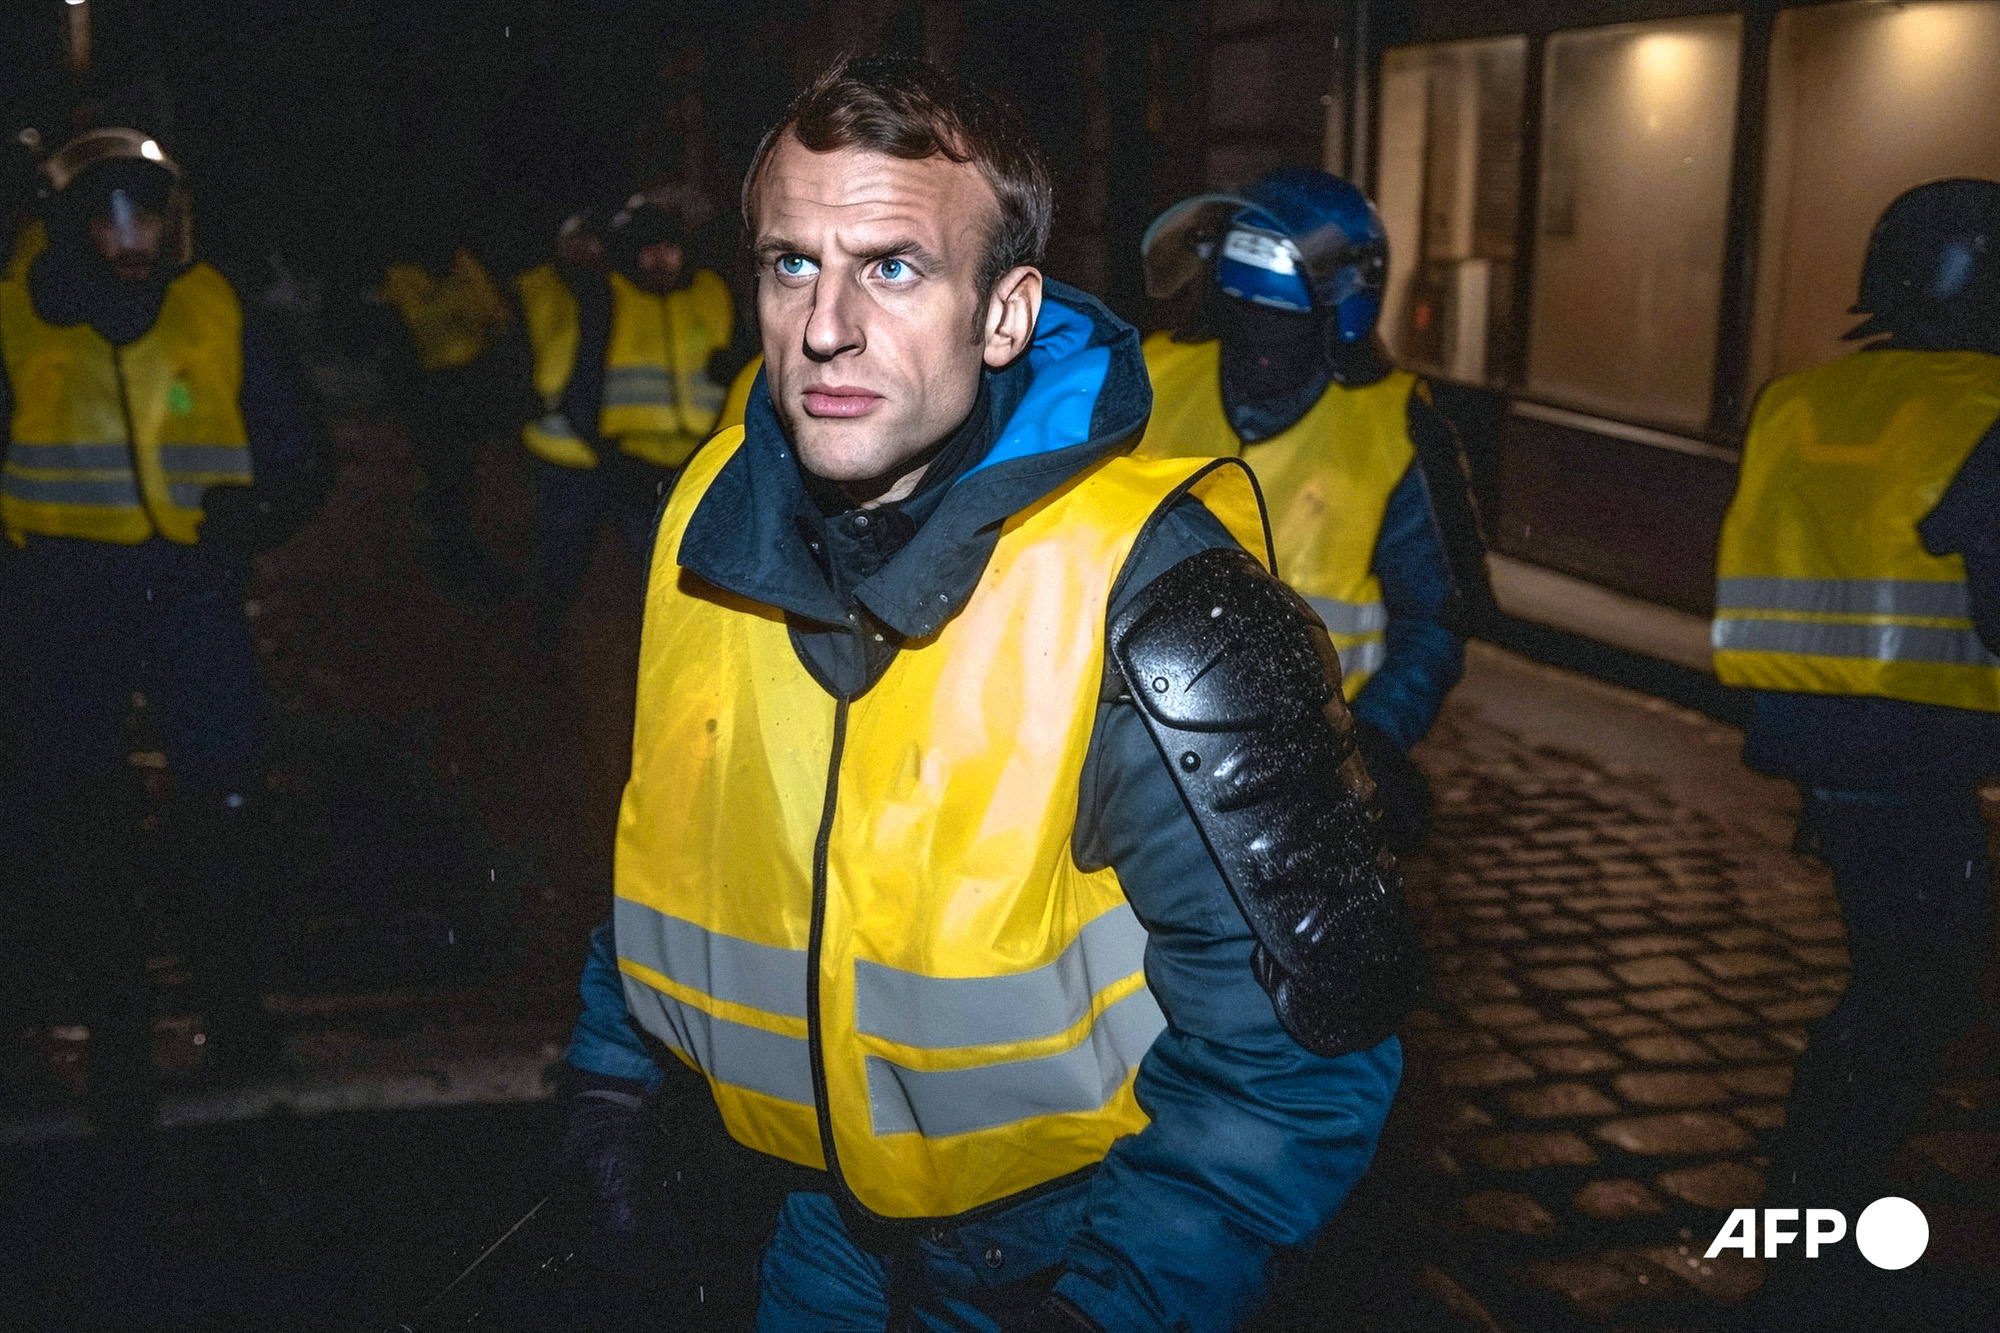 Emmanuel Macron deep fake, in CRS uniform wearing Yellow Vest. March 2023 in Paris